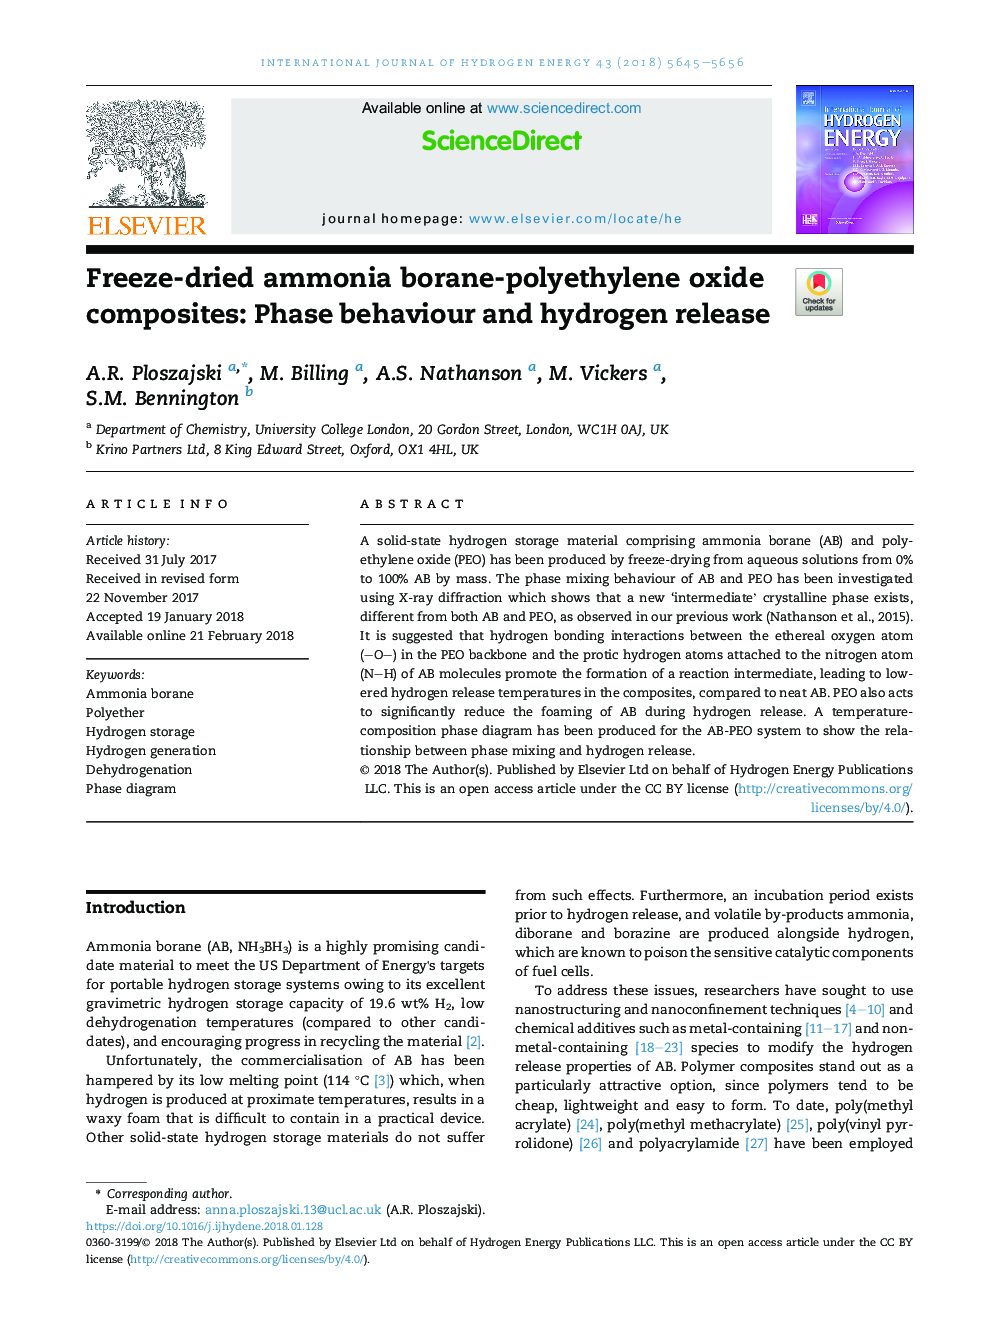 Freeze-dried ammonia borane-polyethylene oxide composites: Phase behaviour and hydrogen release